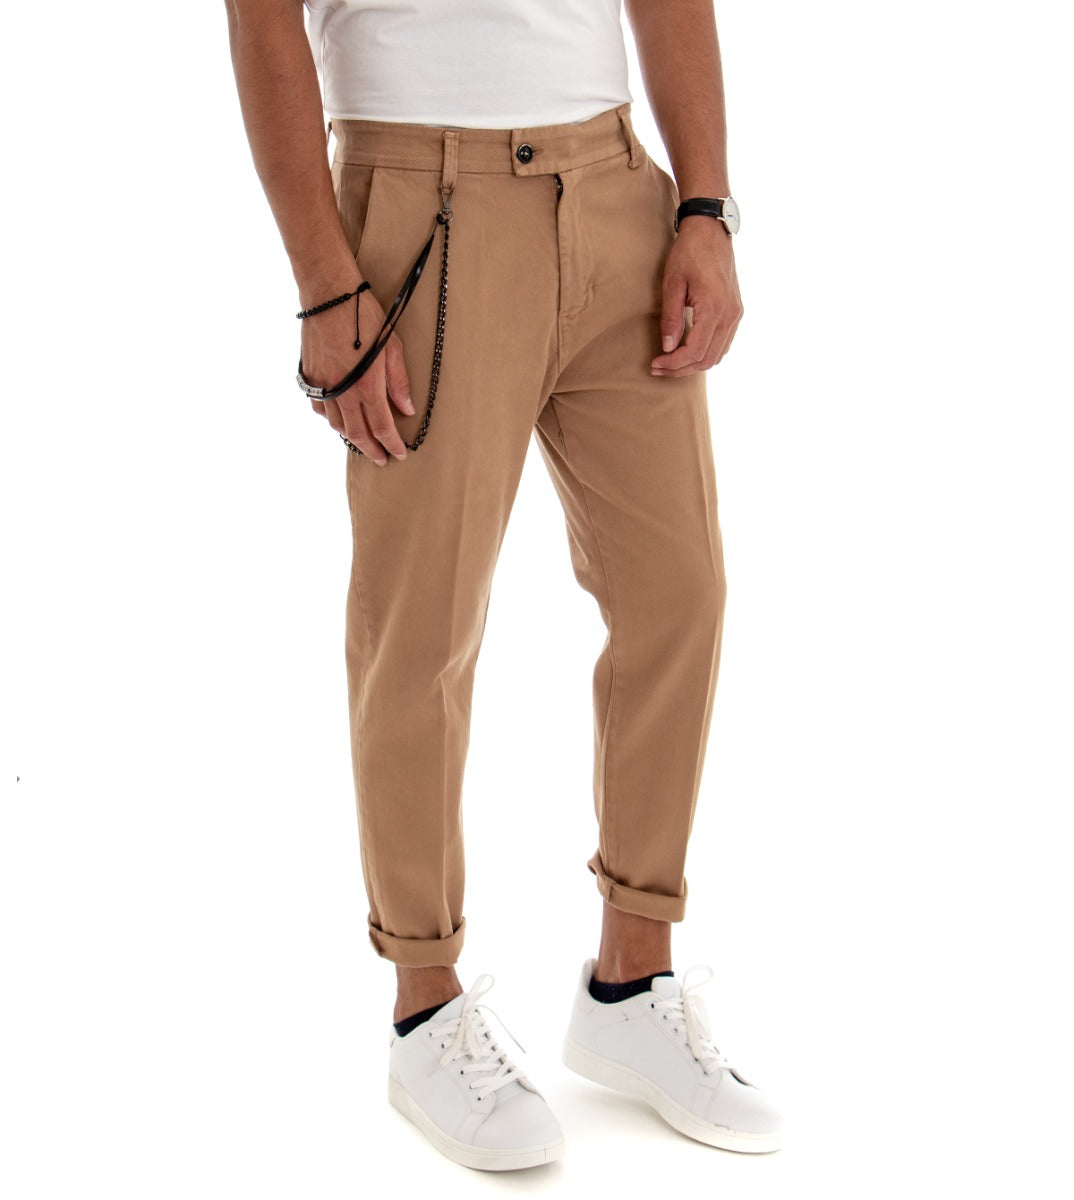 Pantaloni Uomo Tasca America Jeans Tinta Unita Camel Abbottonatura Allungata GIOSAL-P3057A